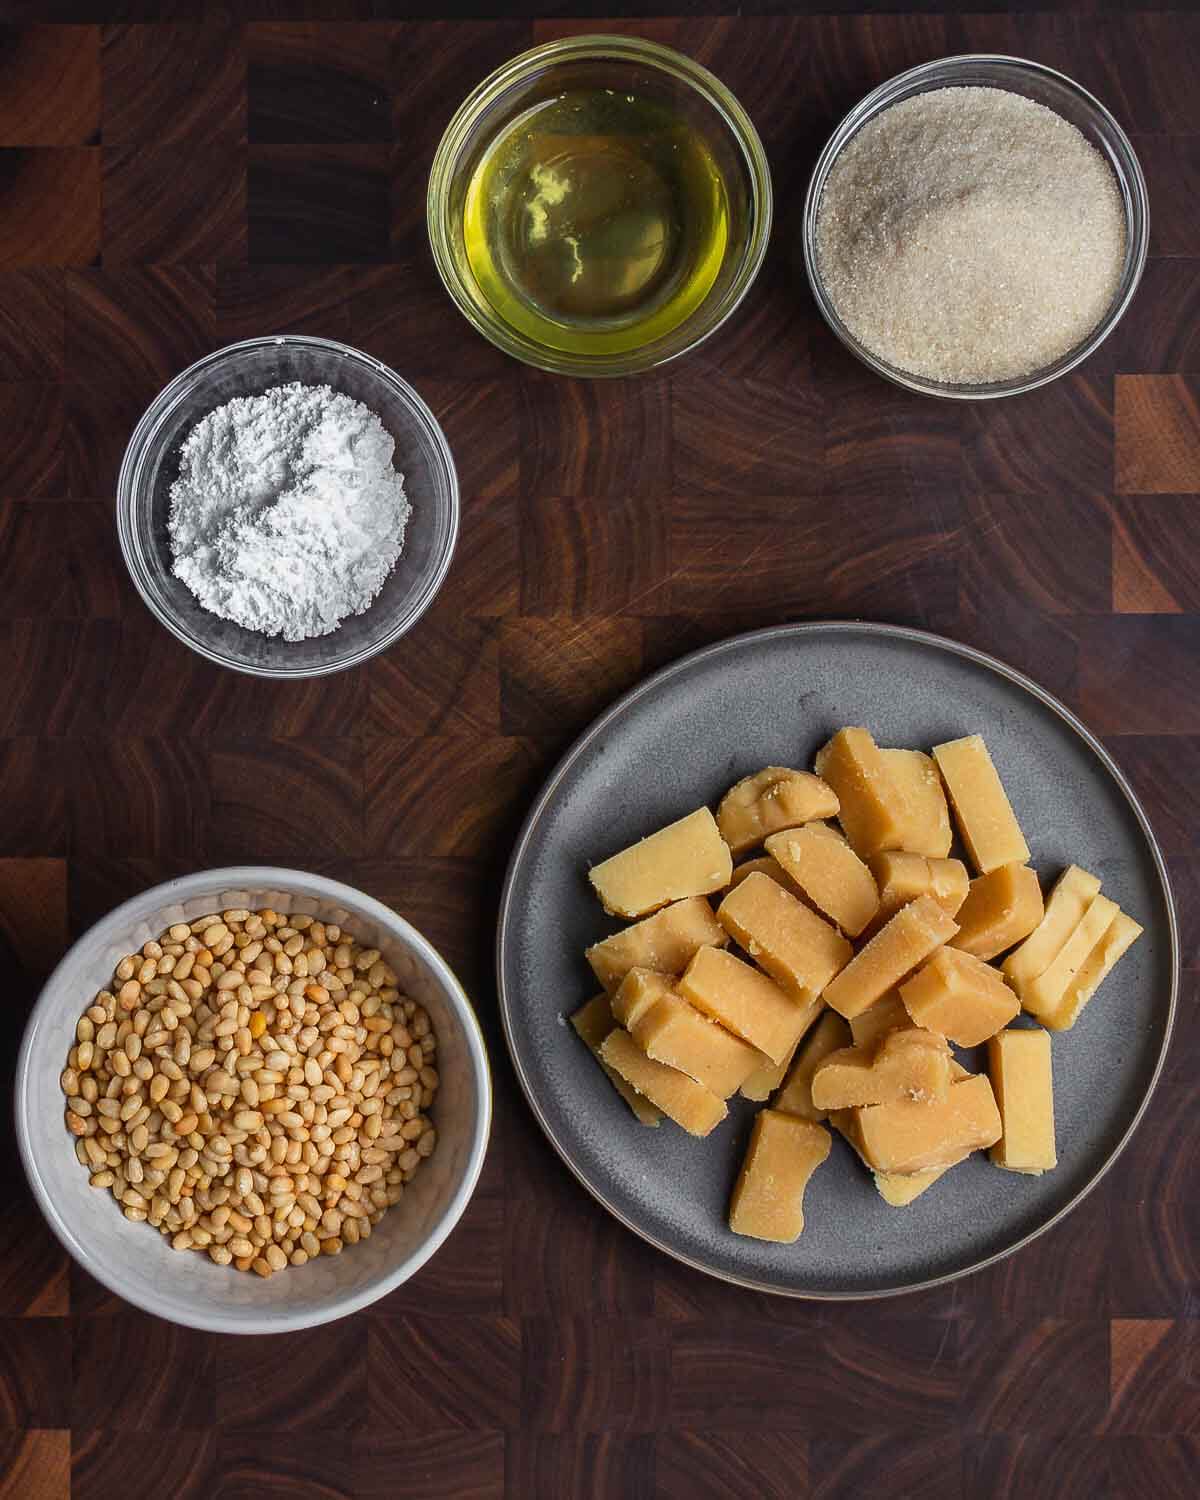 Ingredients shown: egg whites, sugar, flour, pignoli nuts, and almond paste.